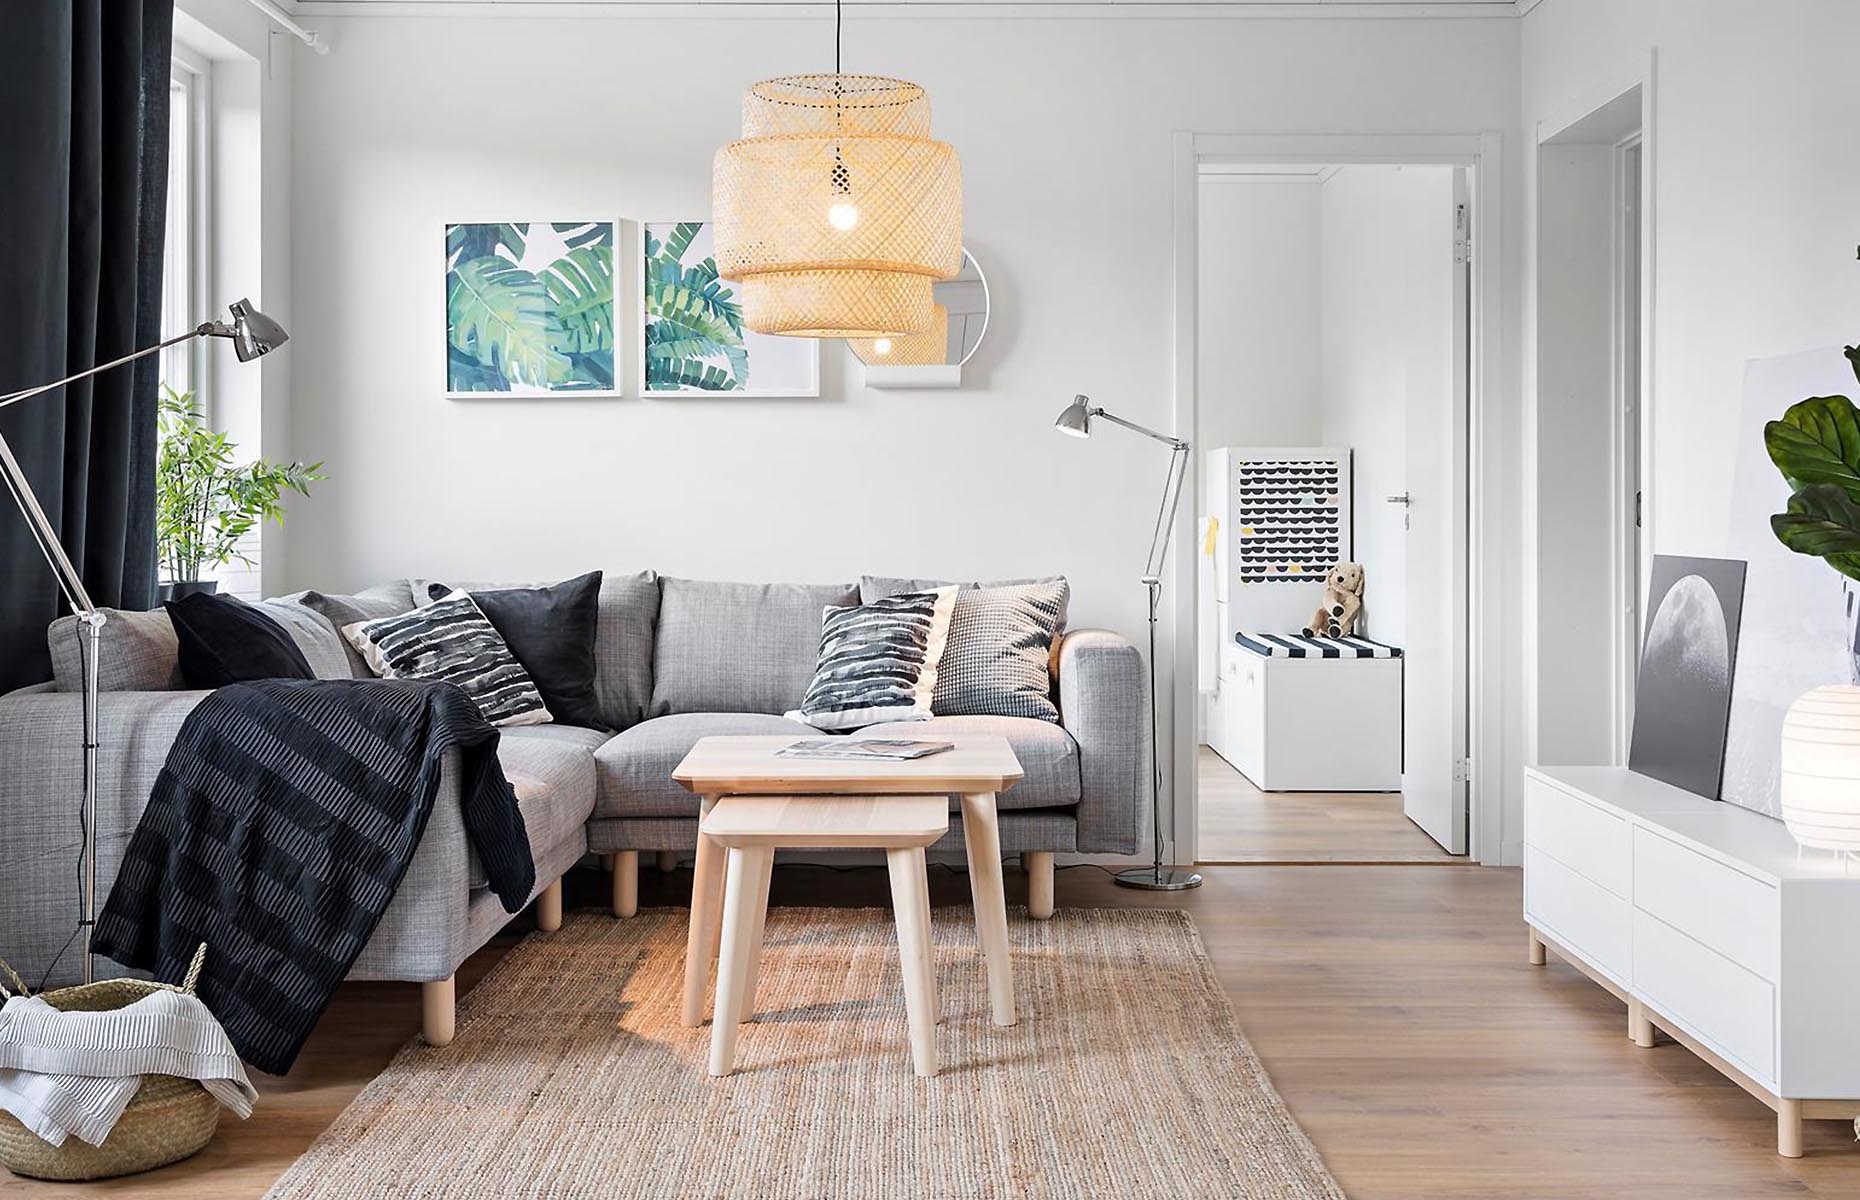 The sleek, stylish interior of a flat in Jordbro, Sweden. Image: BoKlock